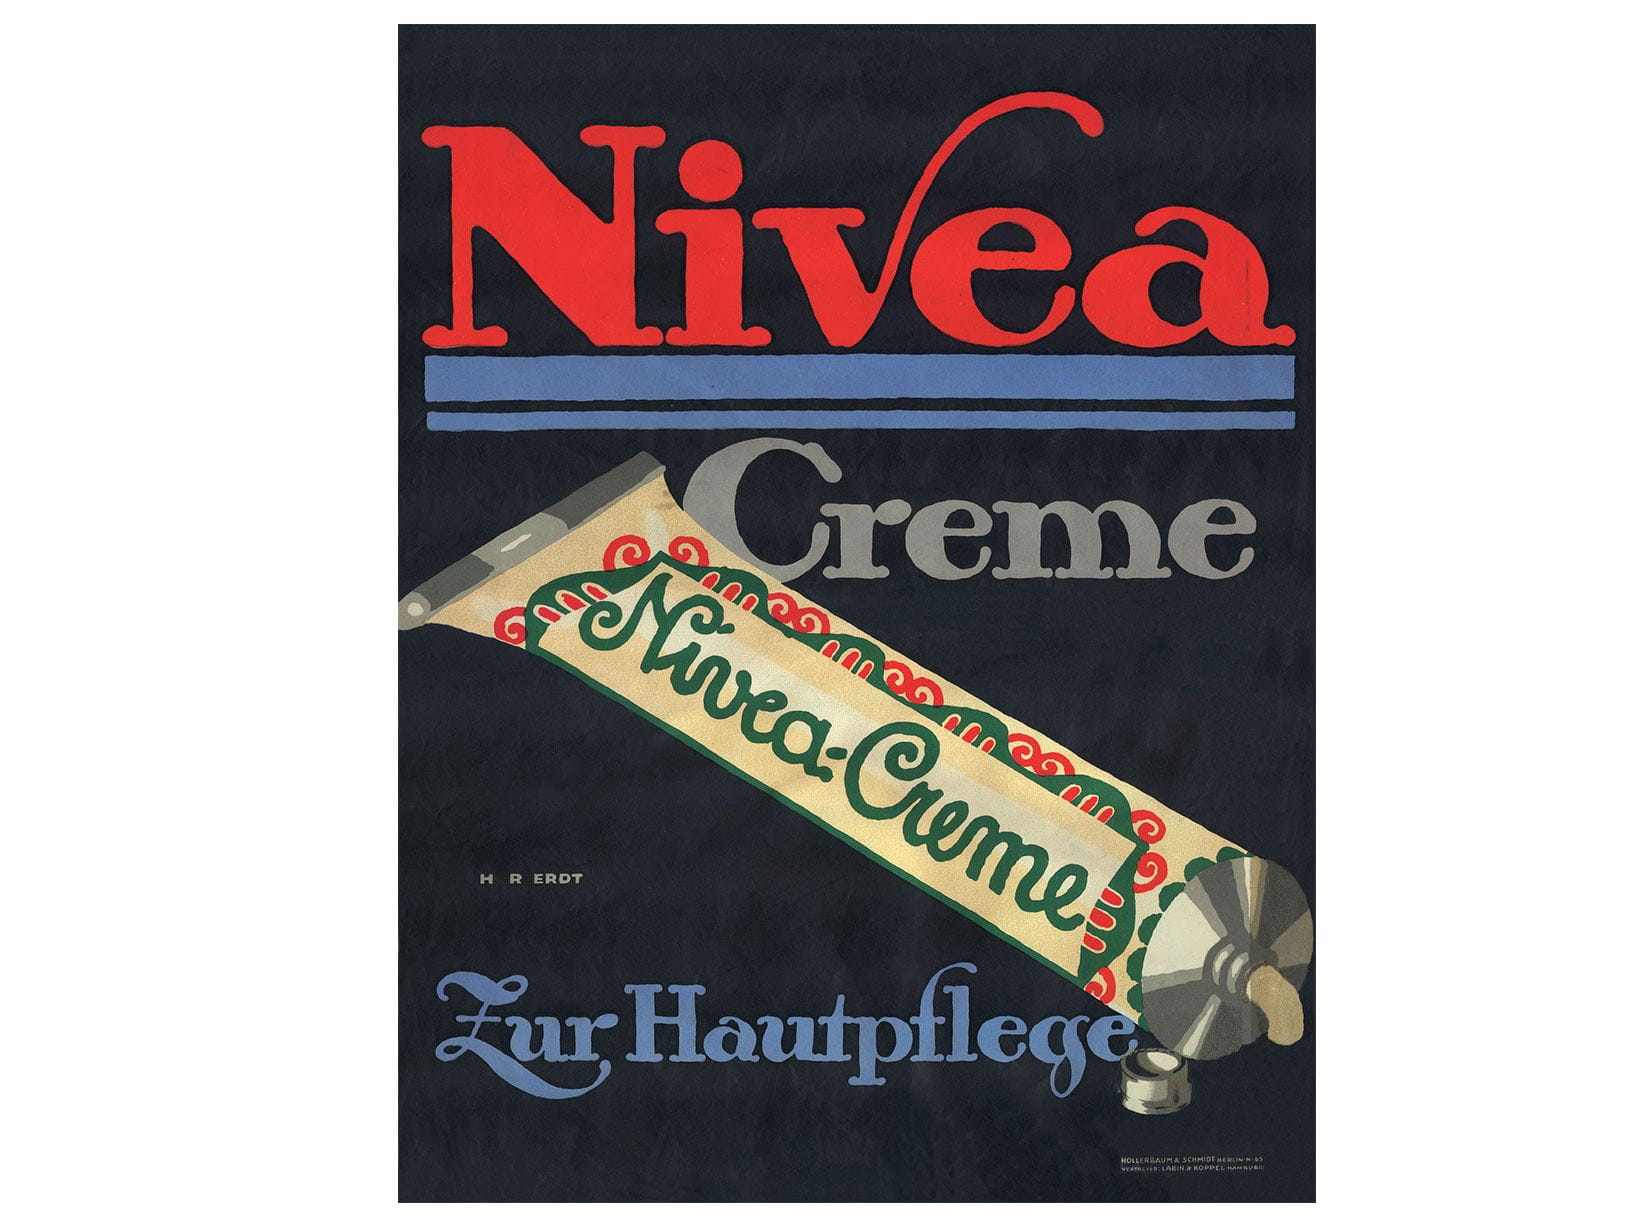 NIVEA Plakat des Werbegrafikers Hans Rudi Erdt um 1912